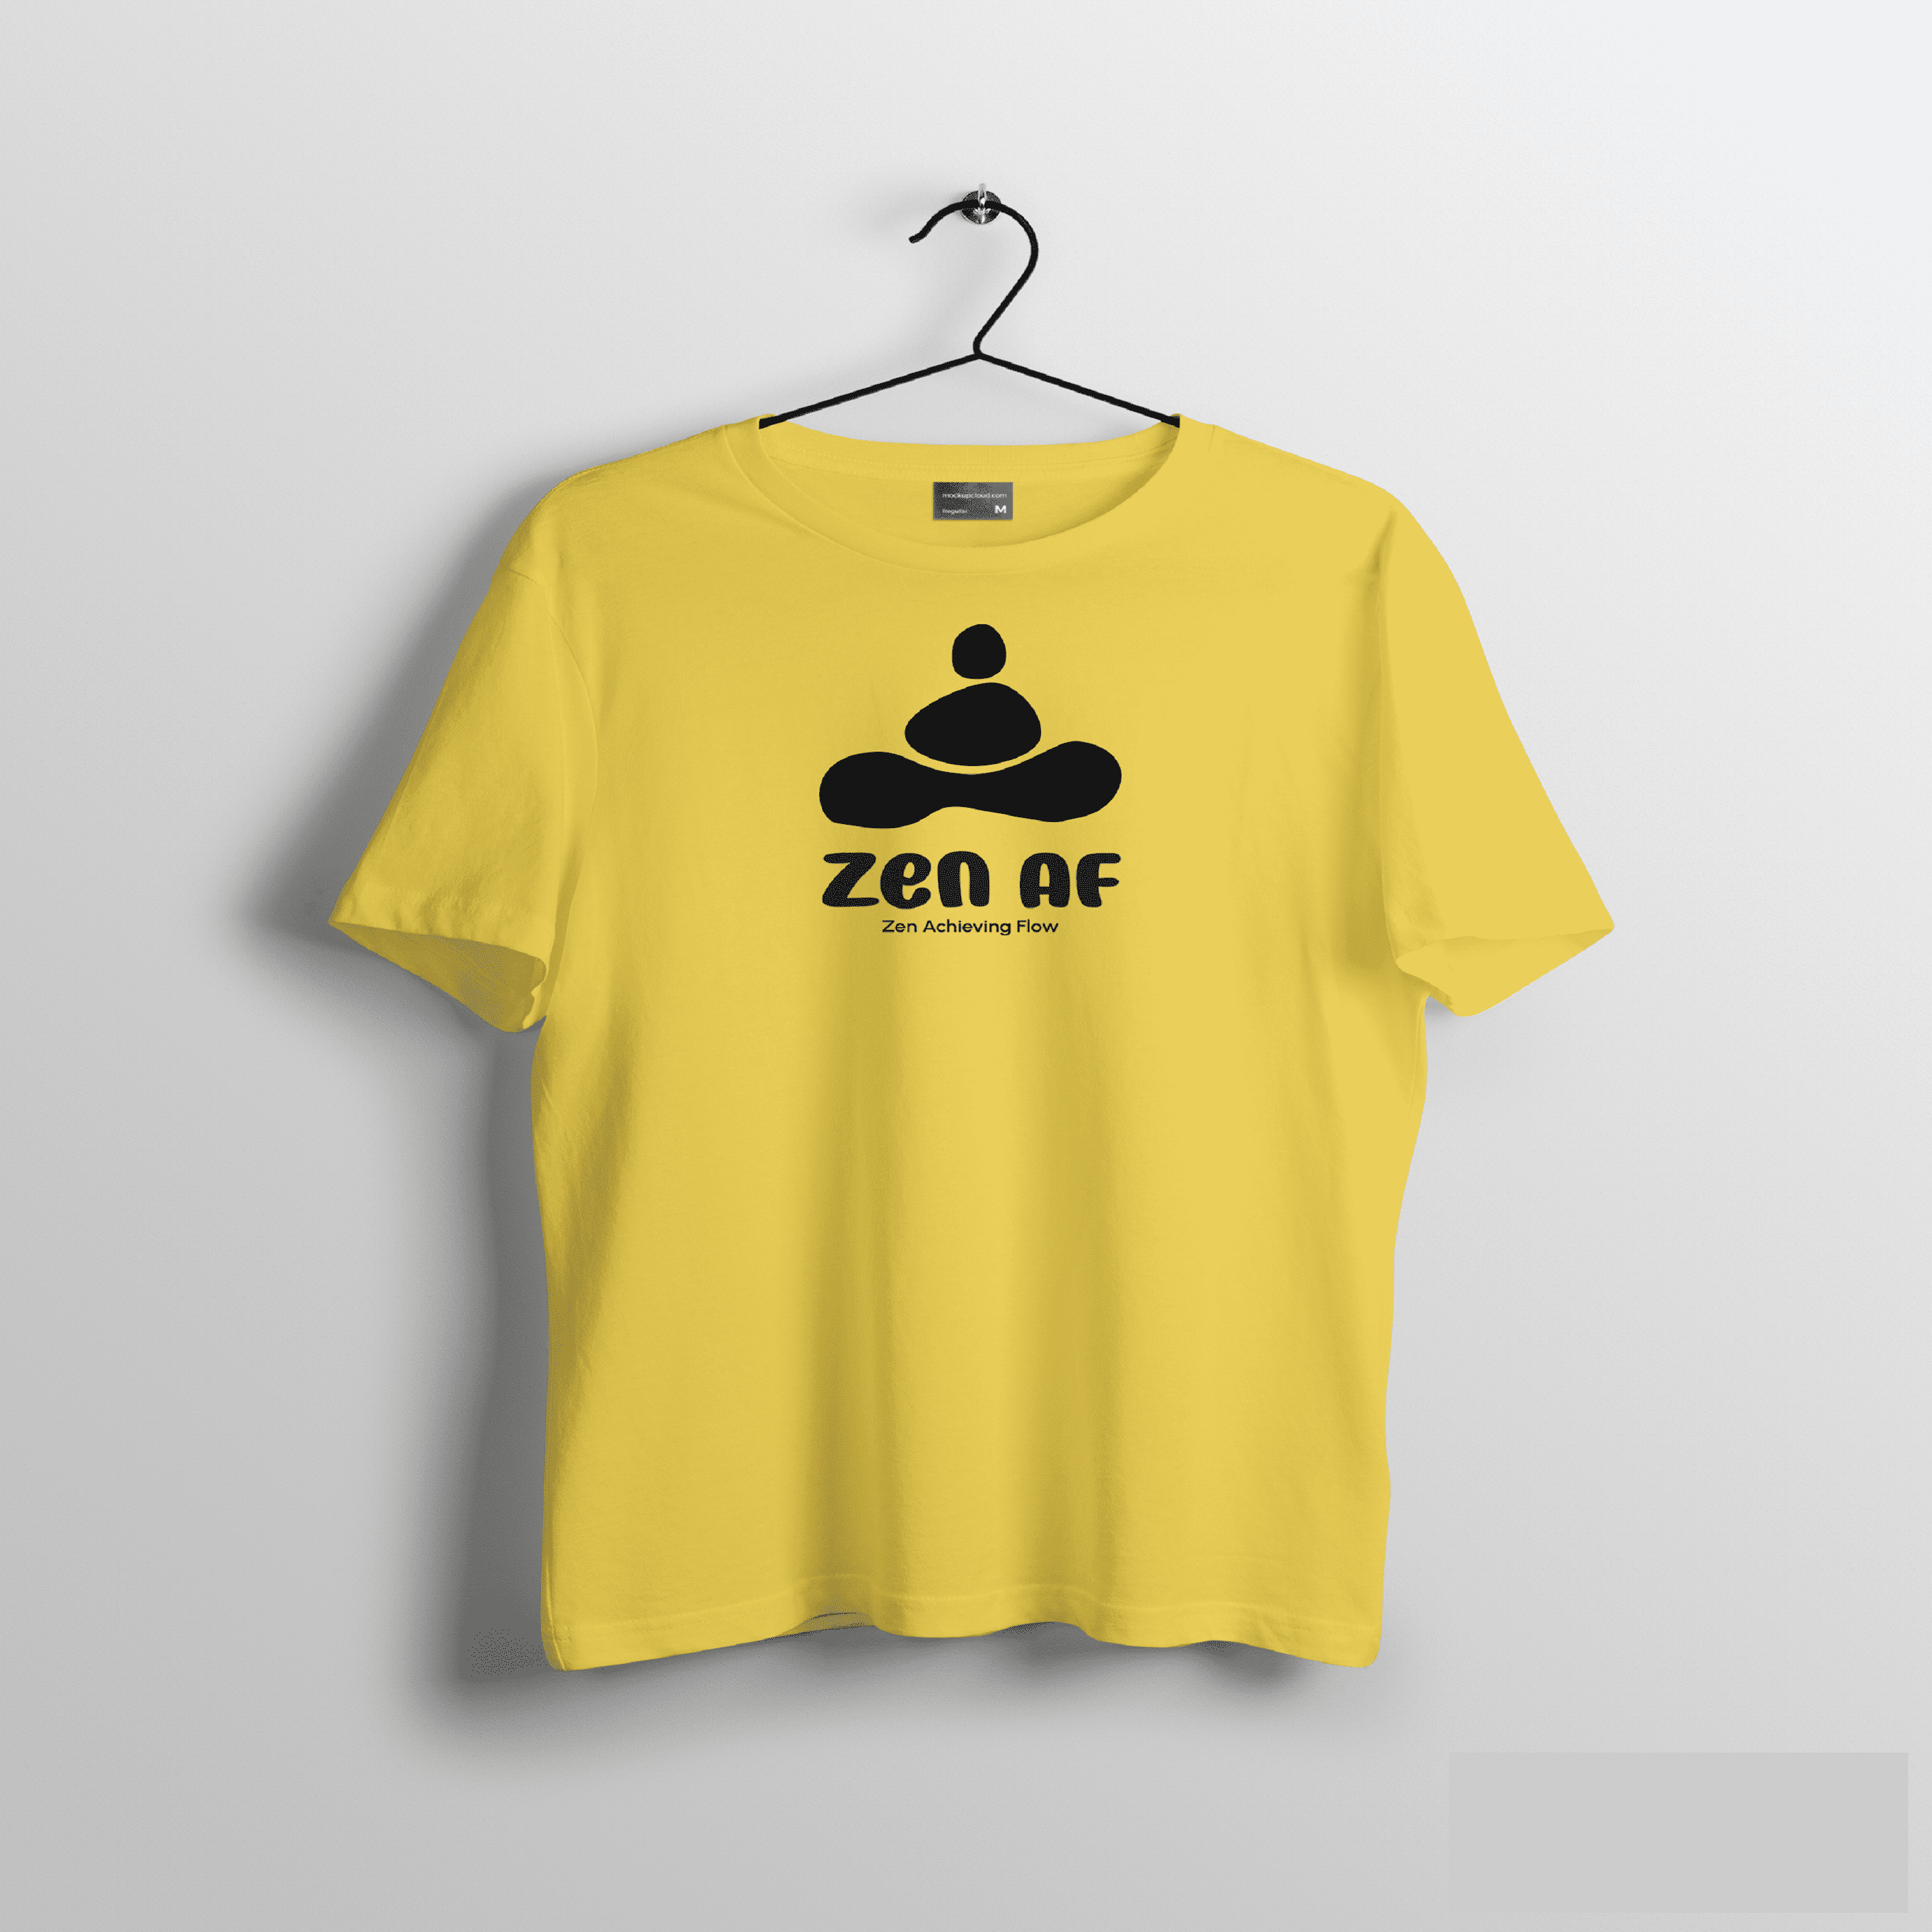 Zen Achieving Flow Graphic Tshirt